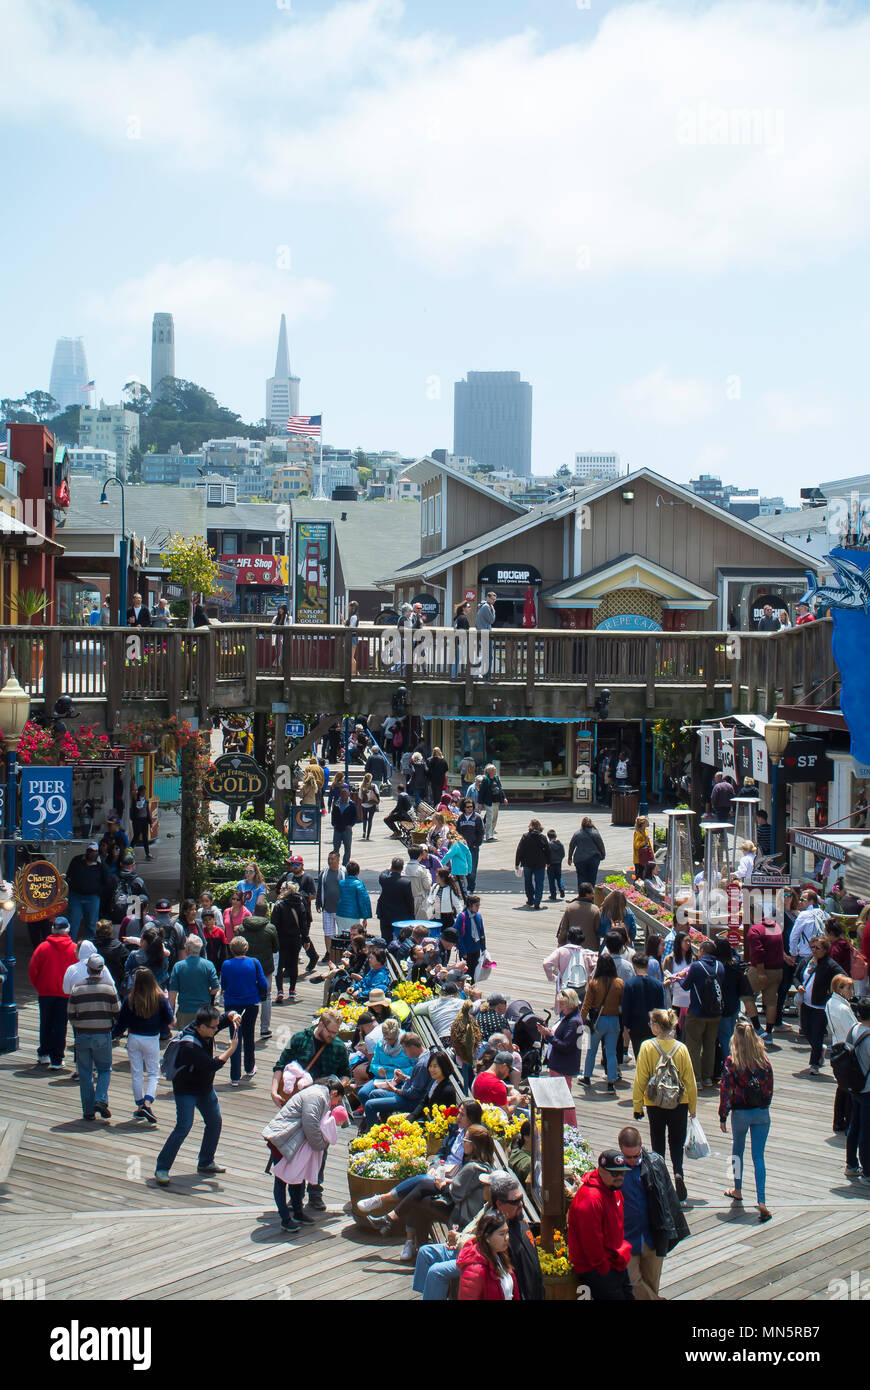 Pier 39, San Francisco Stock Photo